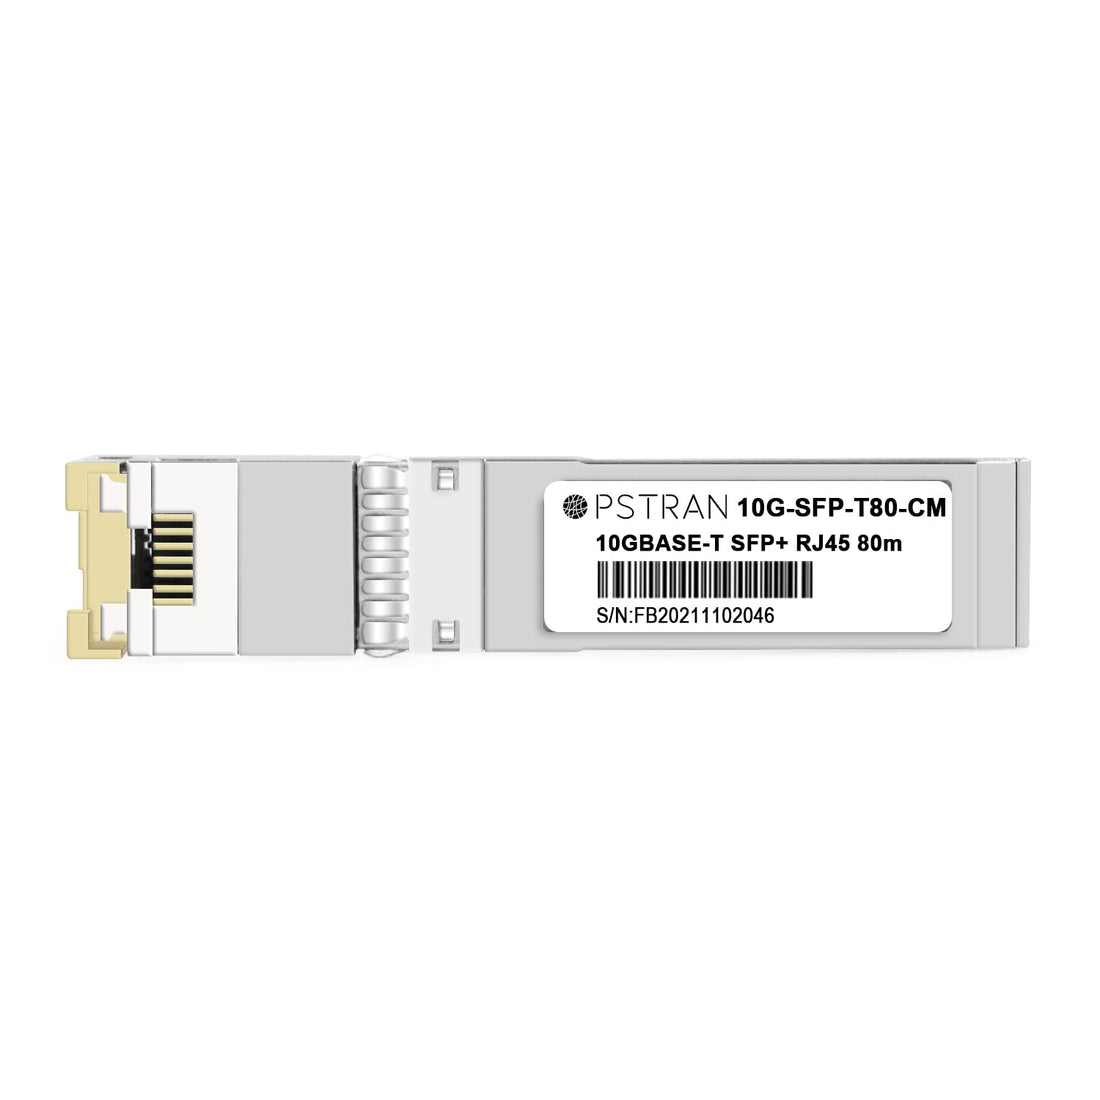 10GBase-T SFP+ Transceiver 80m for Cisco Meraki MA-SFP-10GB-T80 Copper RJ-45 Cat6a/7 10G SFP+ to RJ45 Module